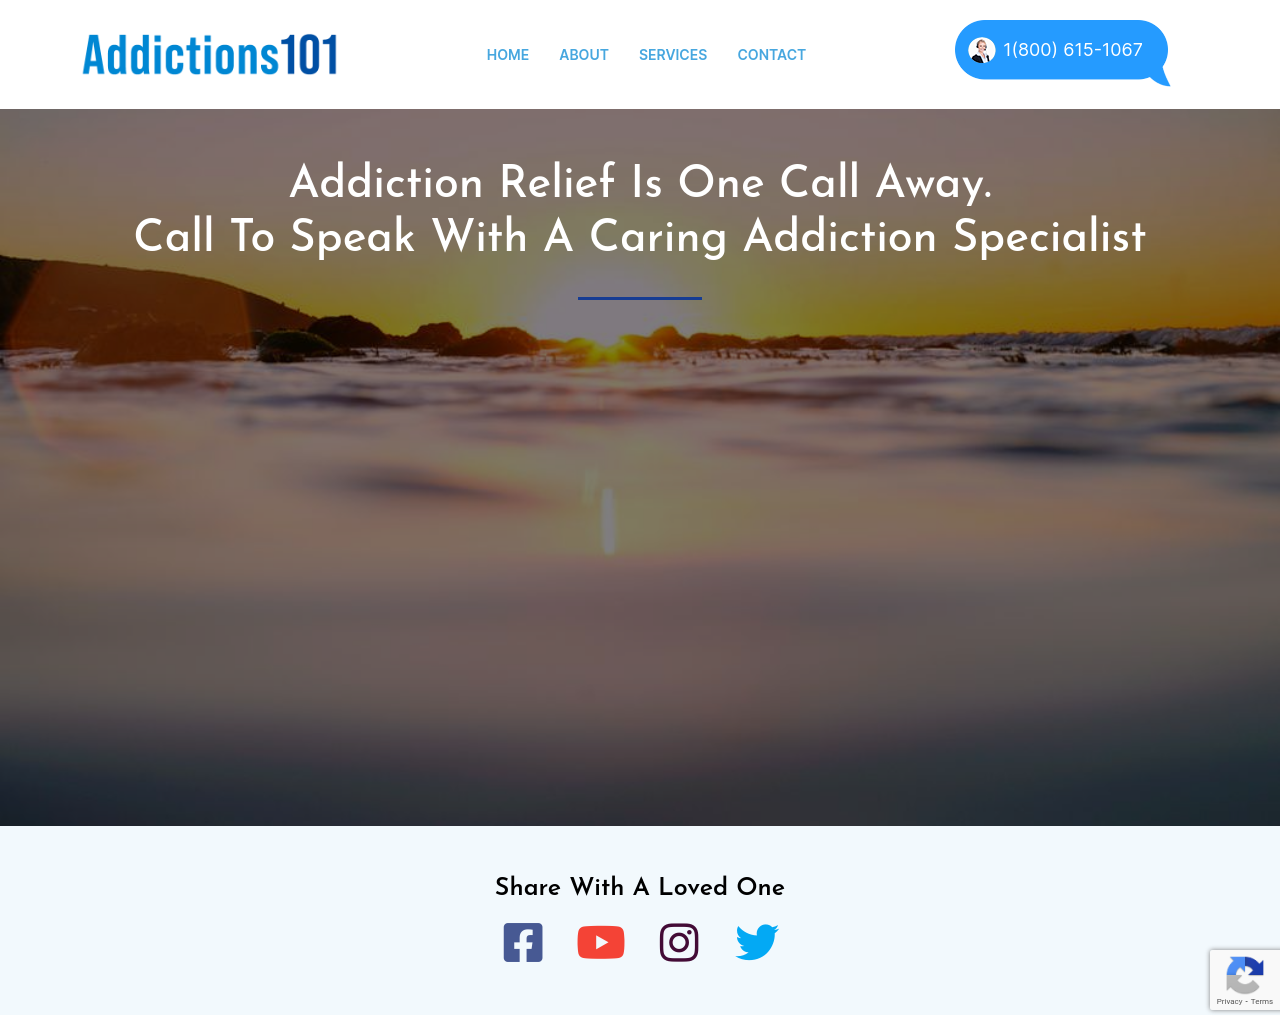 addictiontreatments101.com